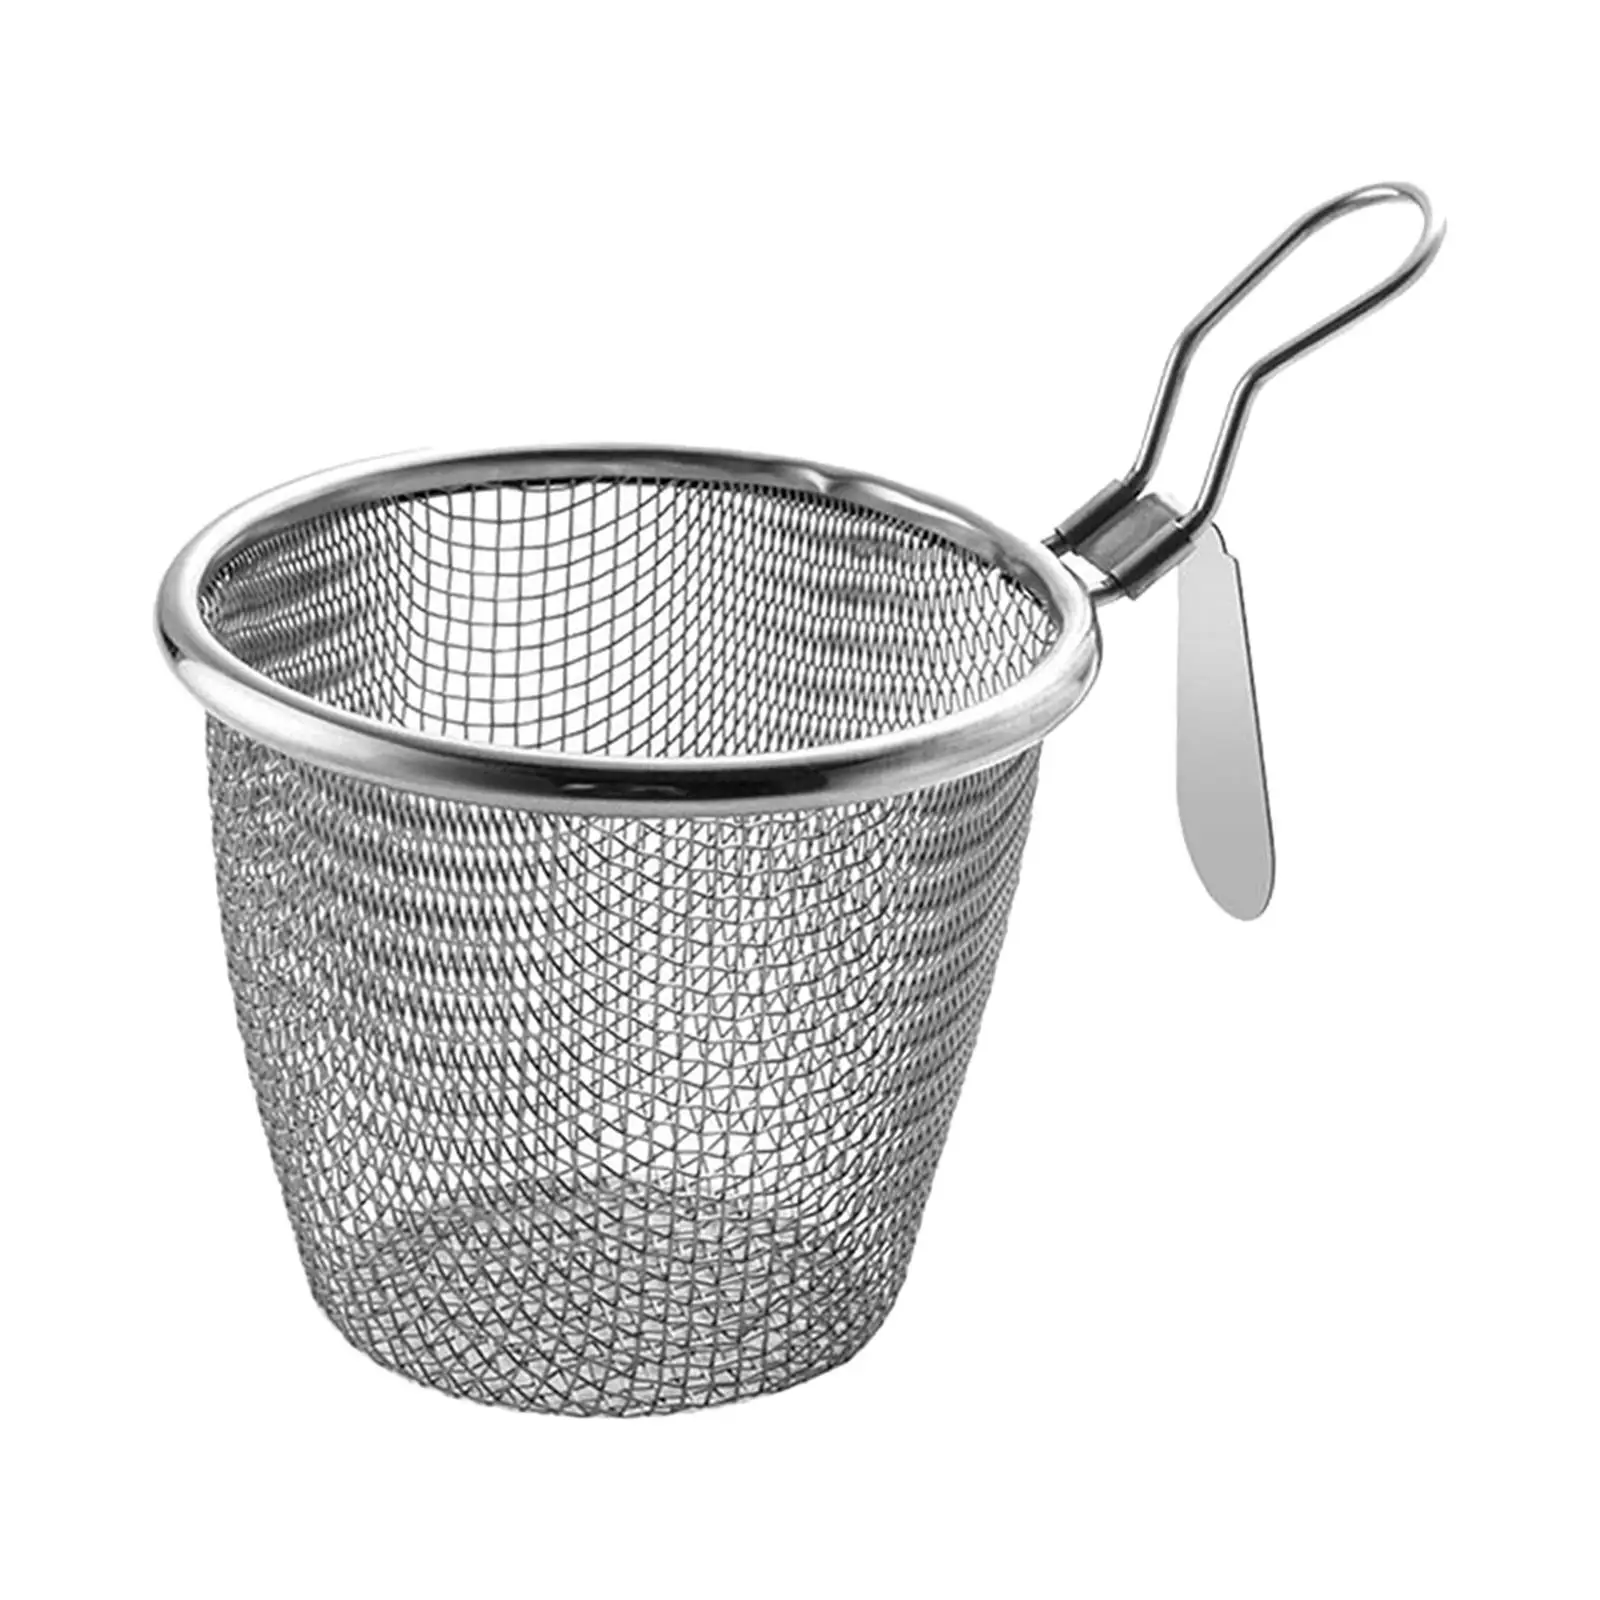 Stainless Steel Mesh Strainer Fry Basket Food Colander for Noodles Pasta Frying Cooking